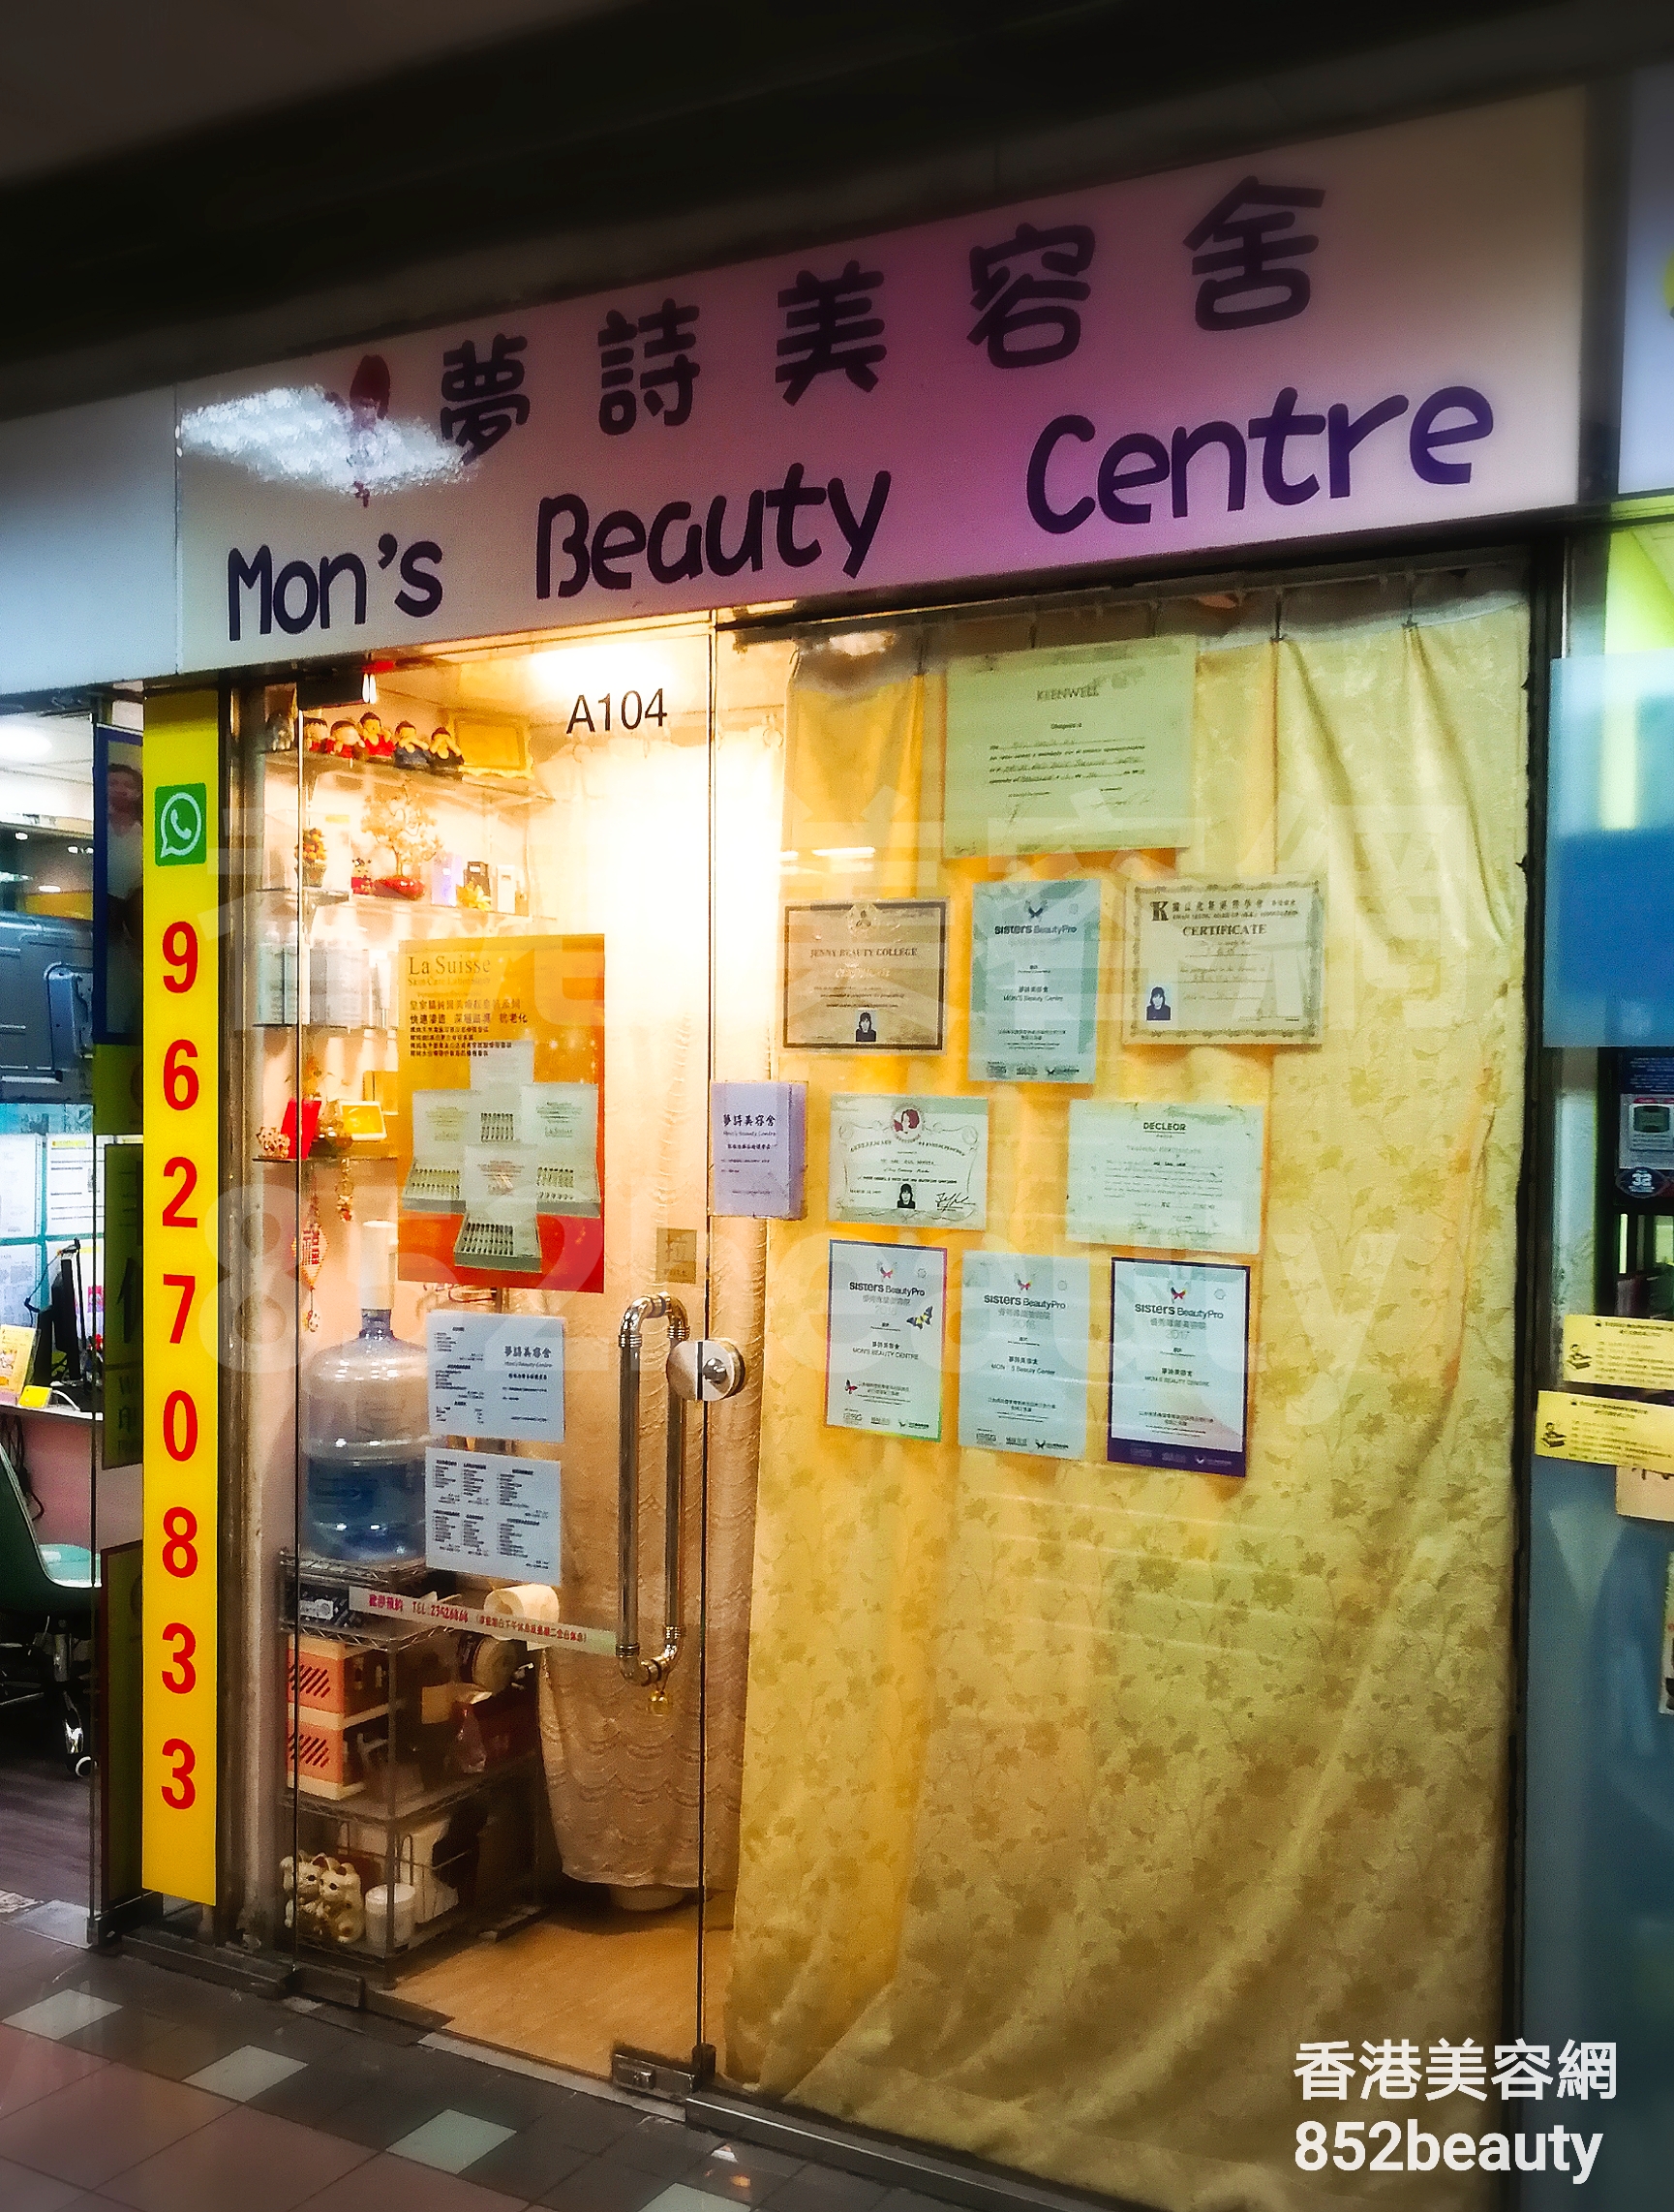 眼部護理: 夢詩美容舍 Mon's Beauty Centre